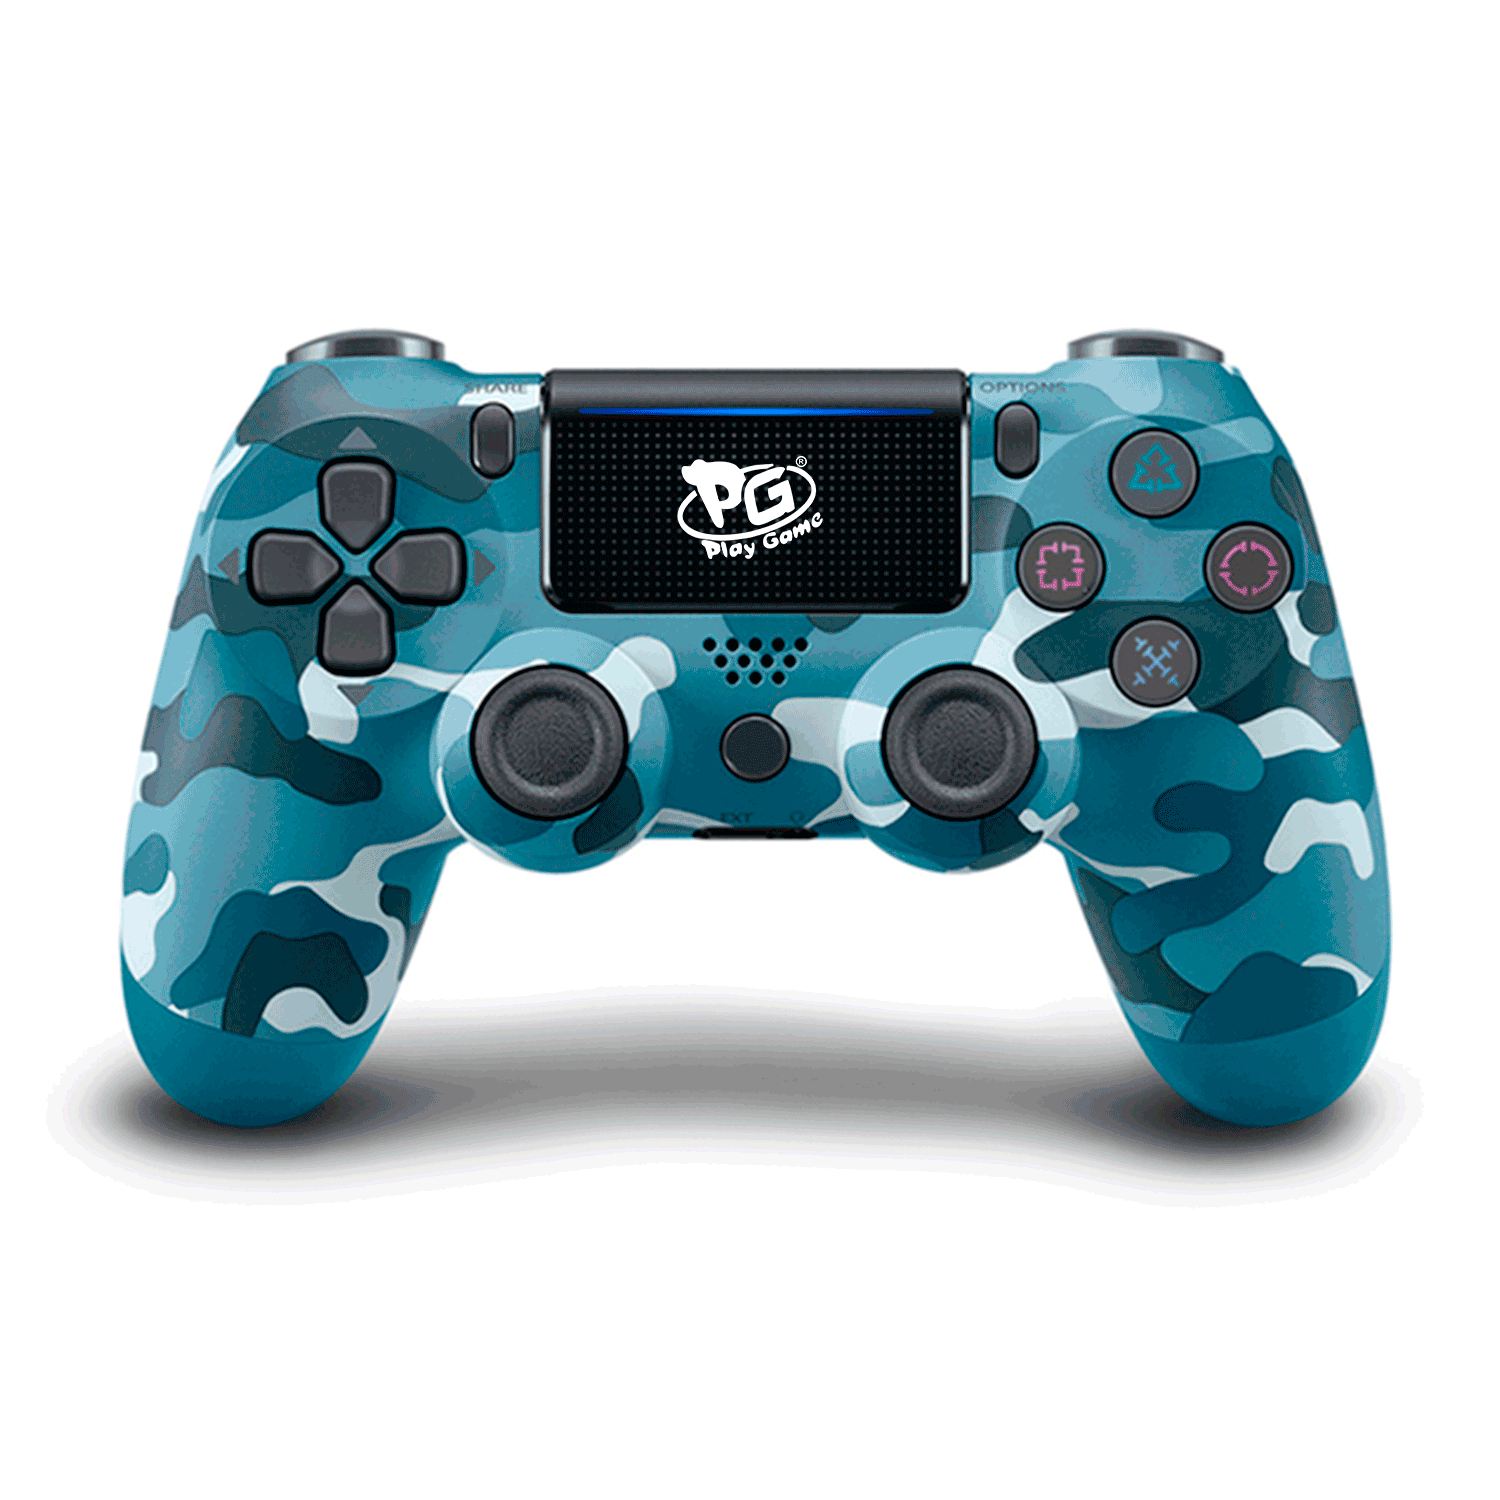 Controle Play Game Dualshock para PS4 - Azul Camuflado

